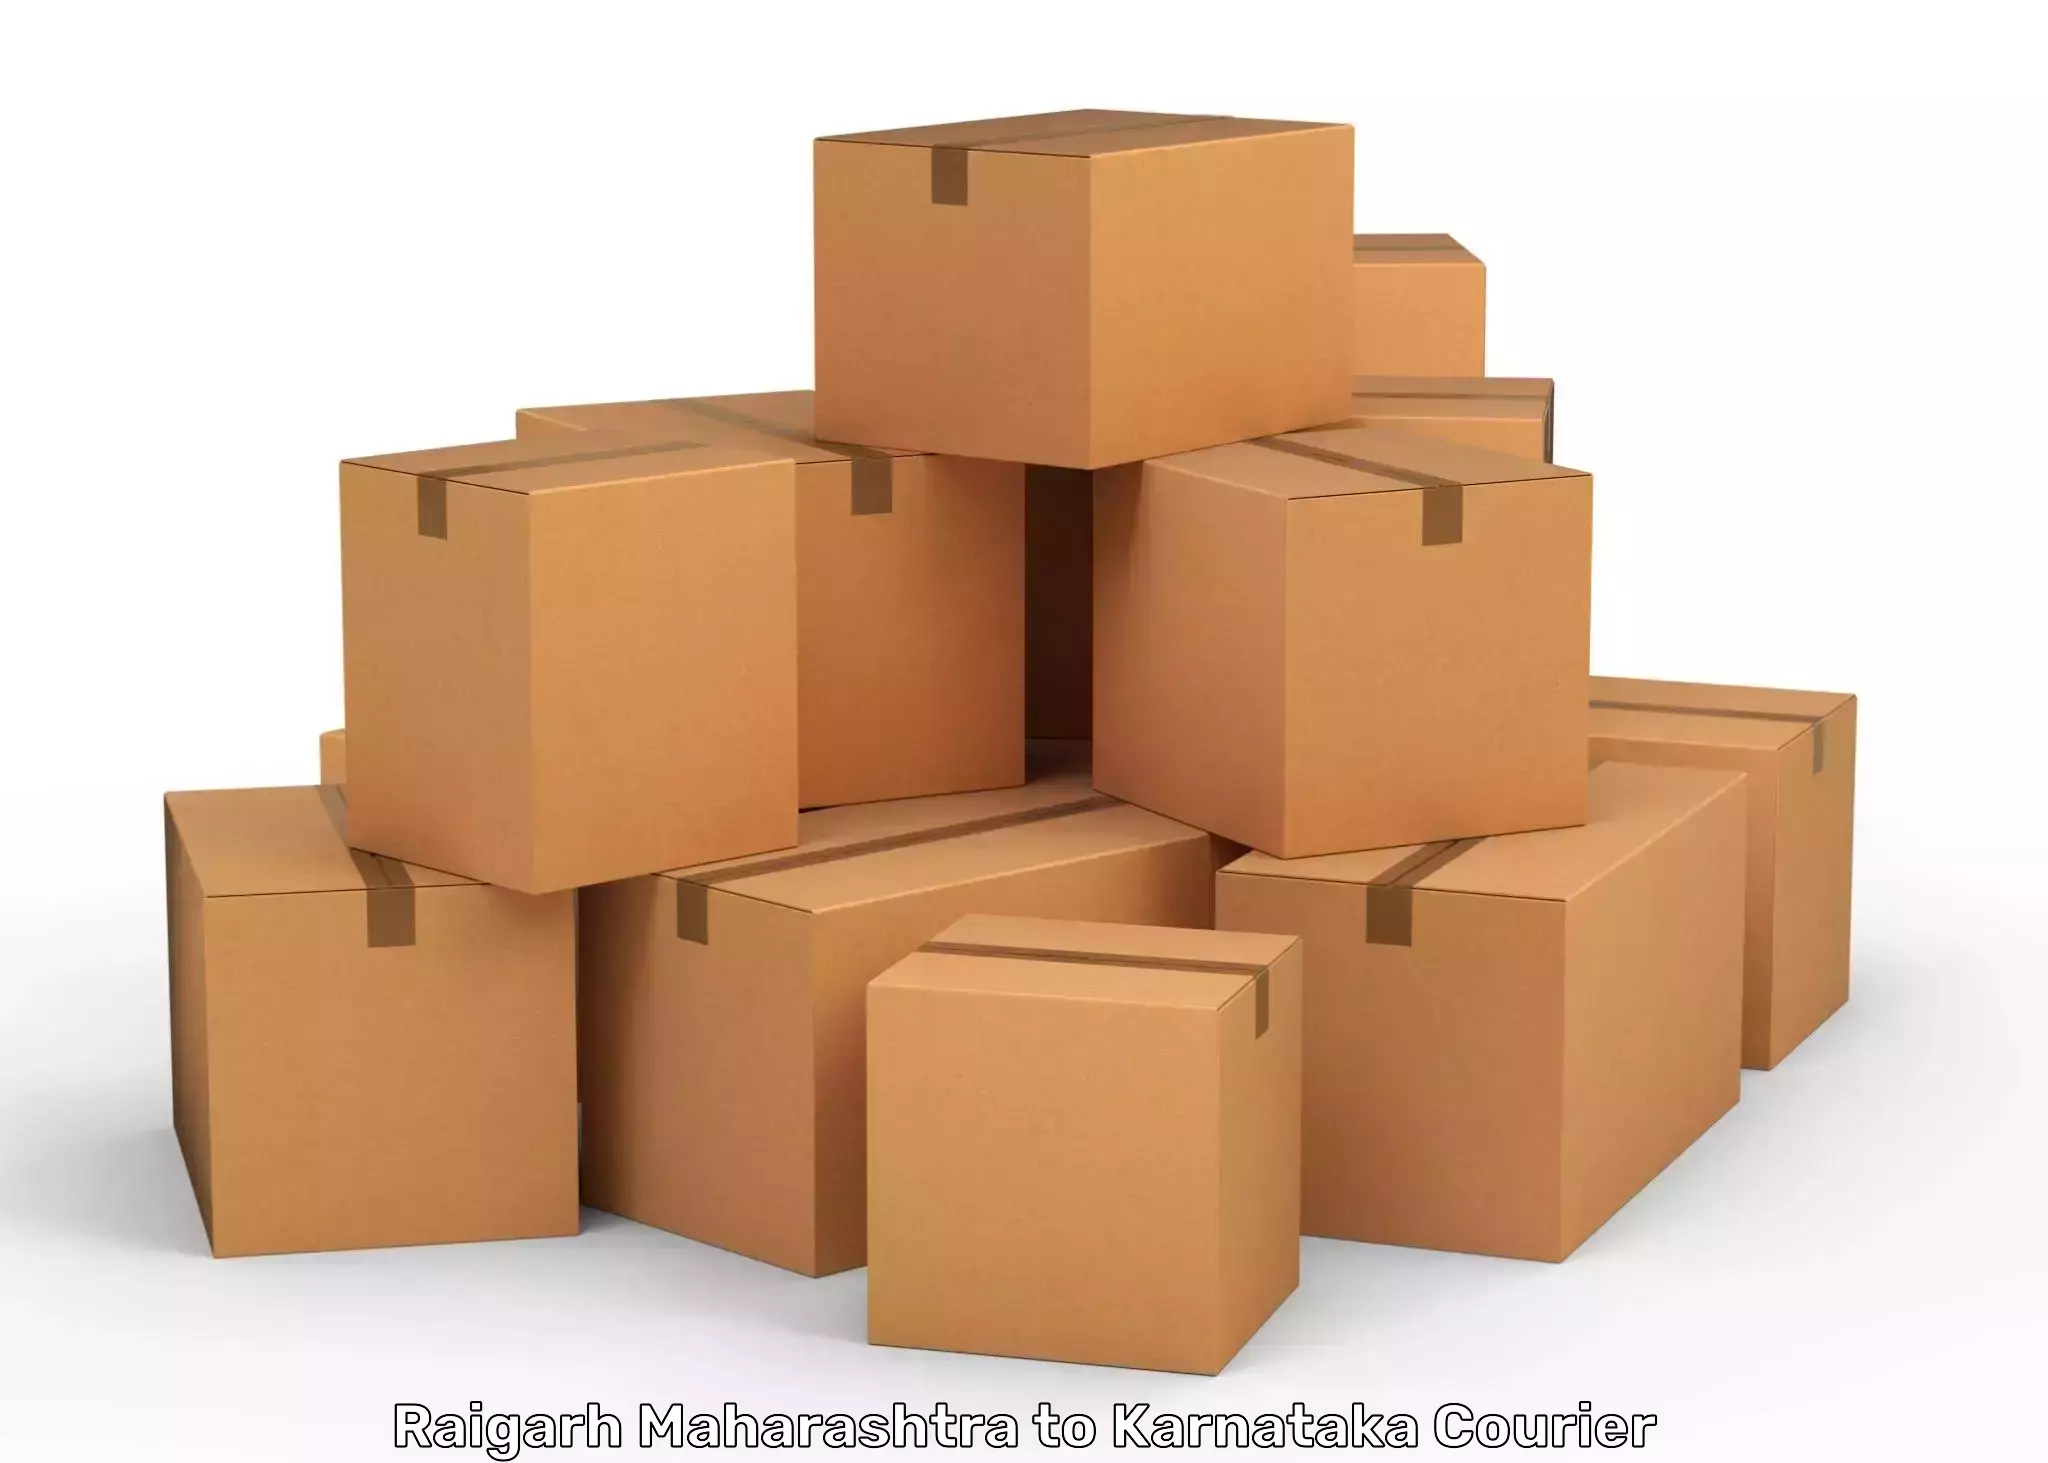 Package delivery network Raigarh Maharashtra to Thirthahalli